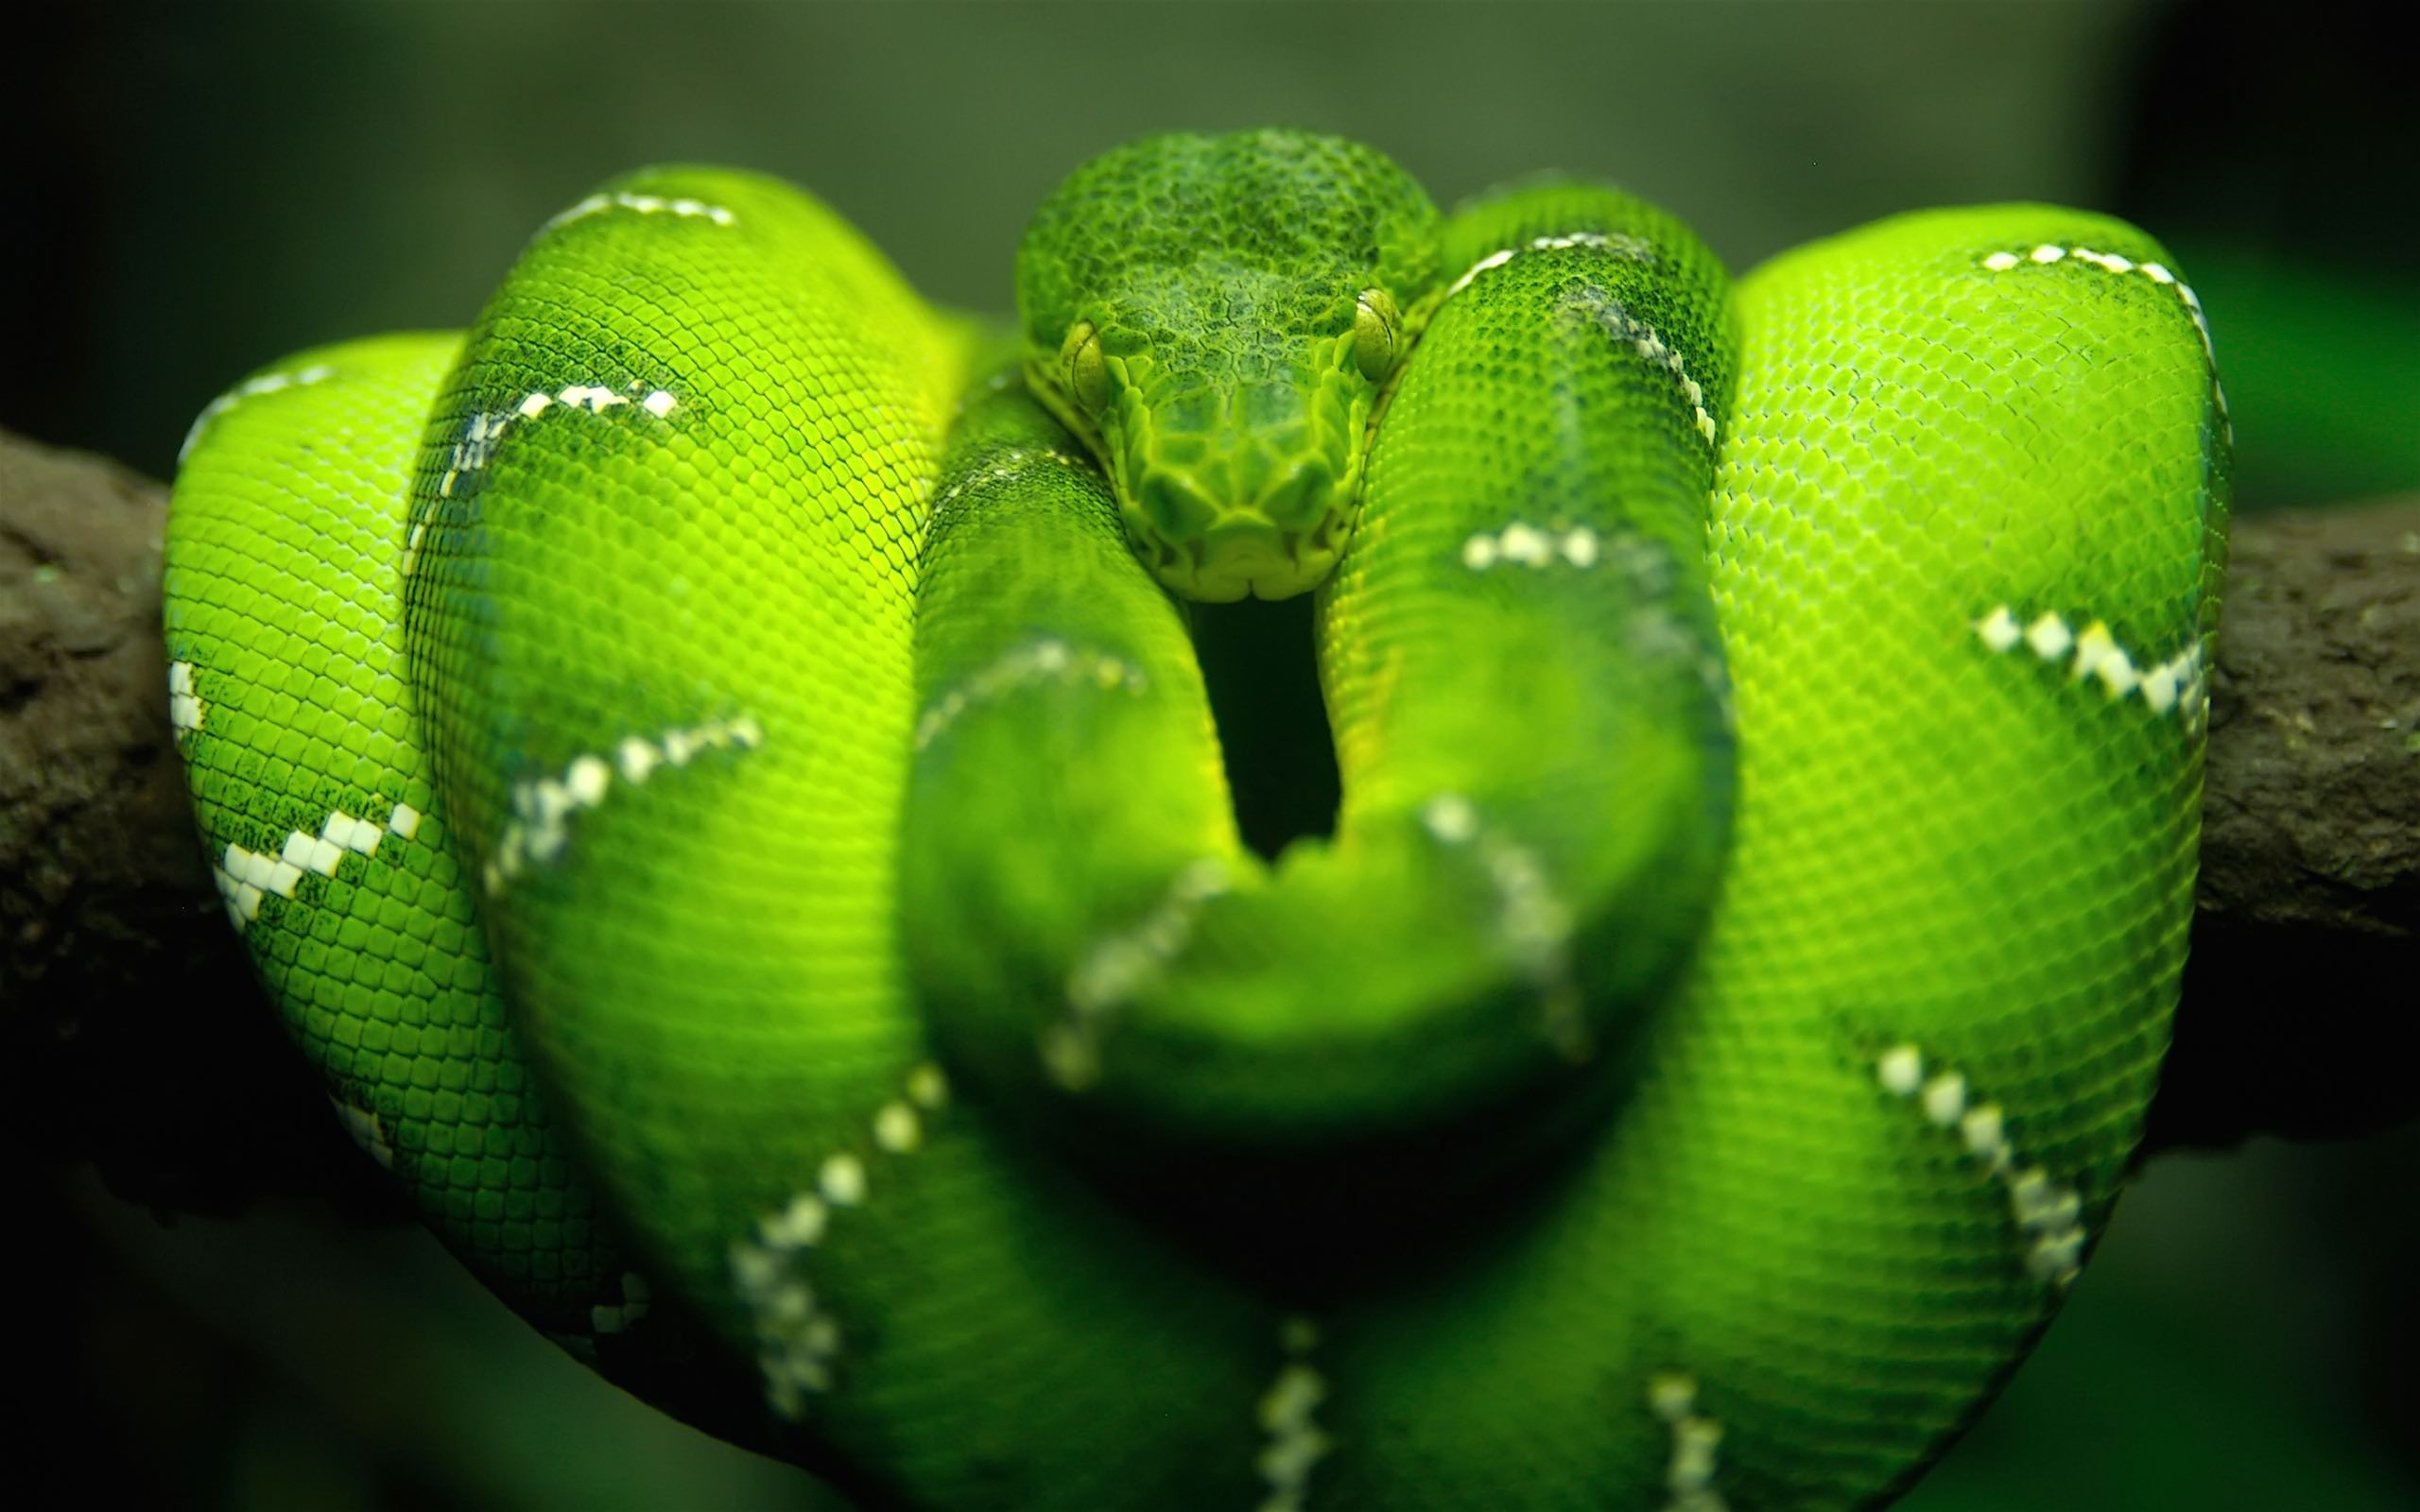 Green tree python photo